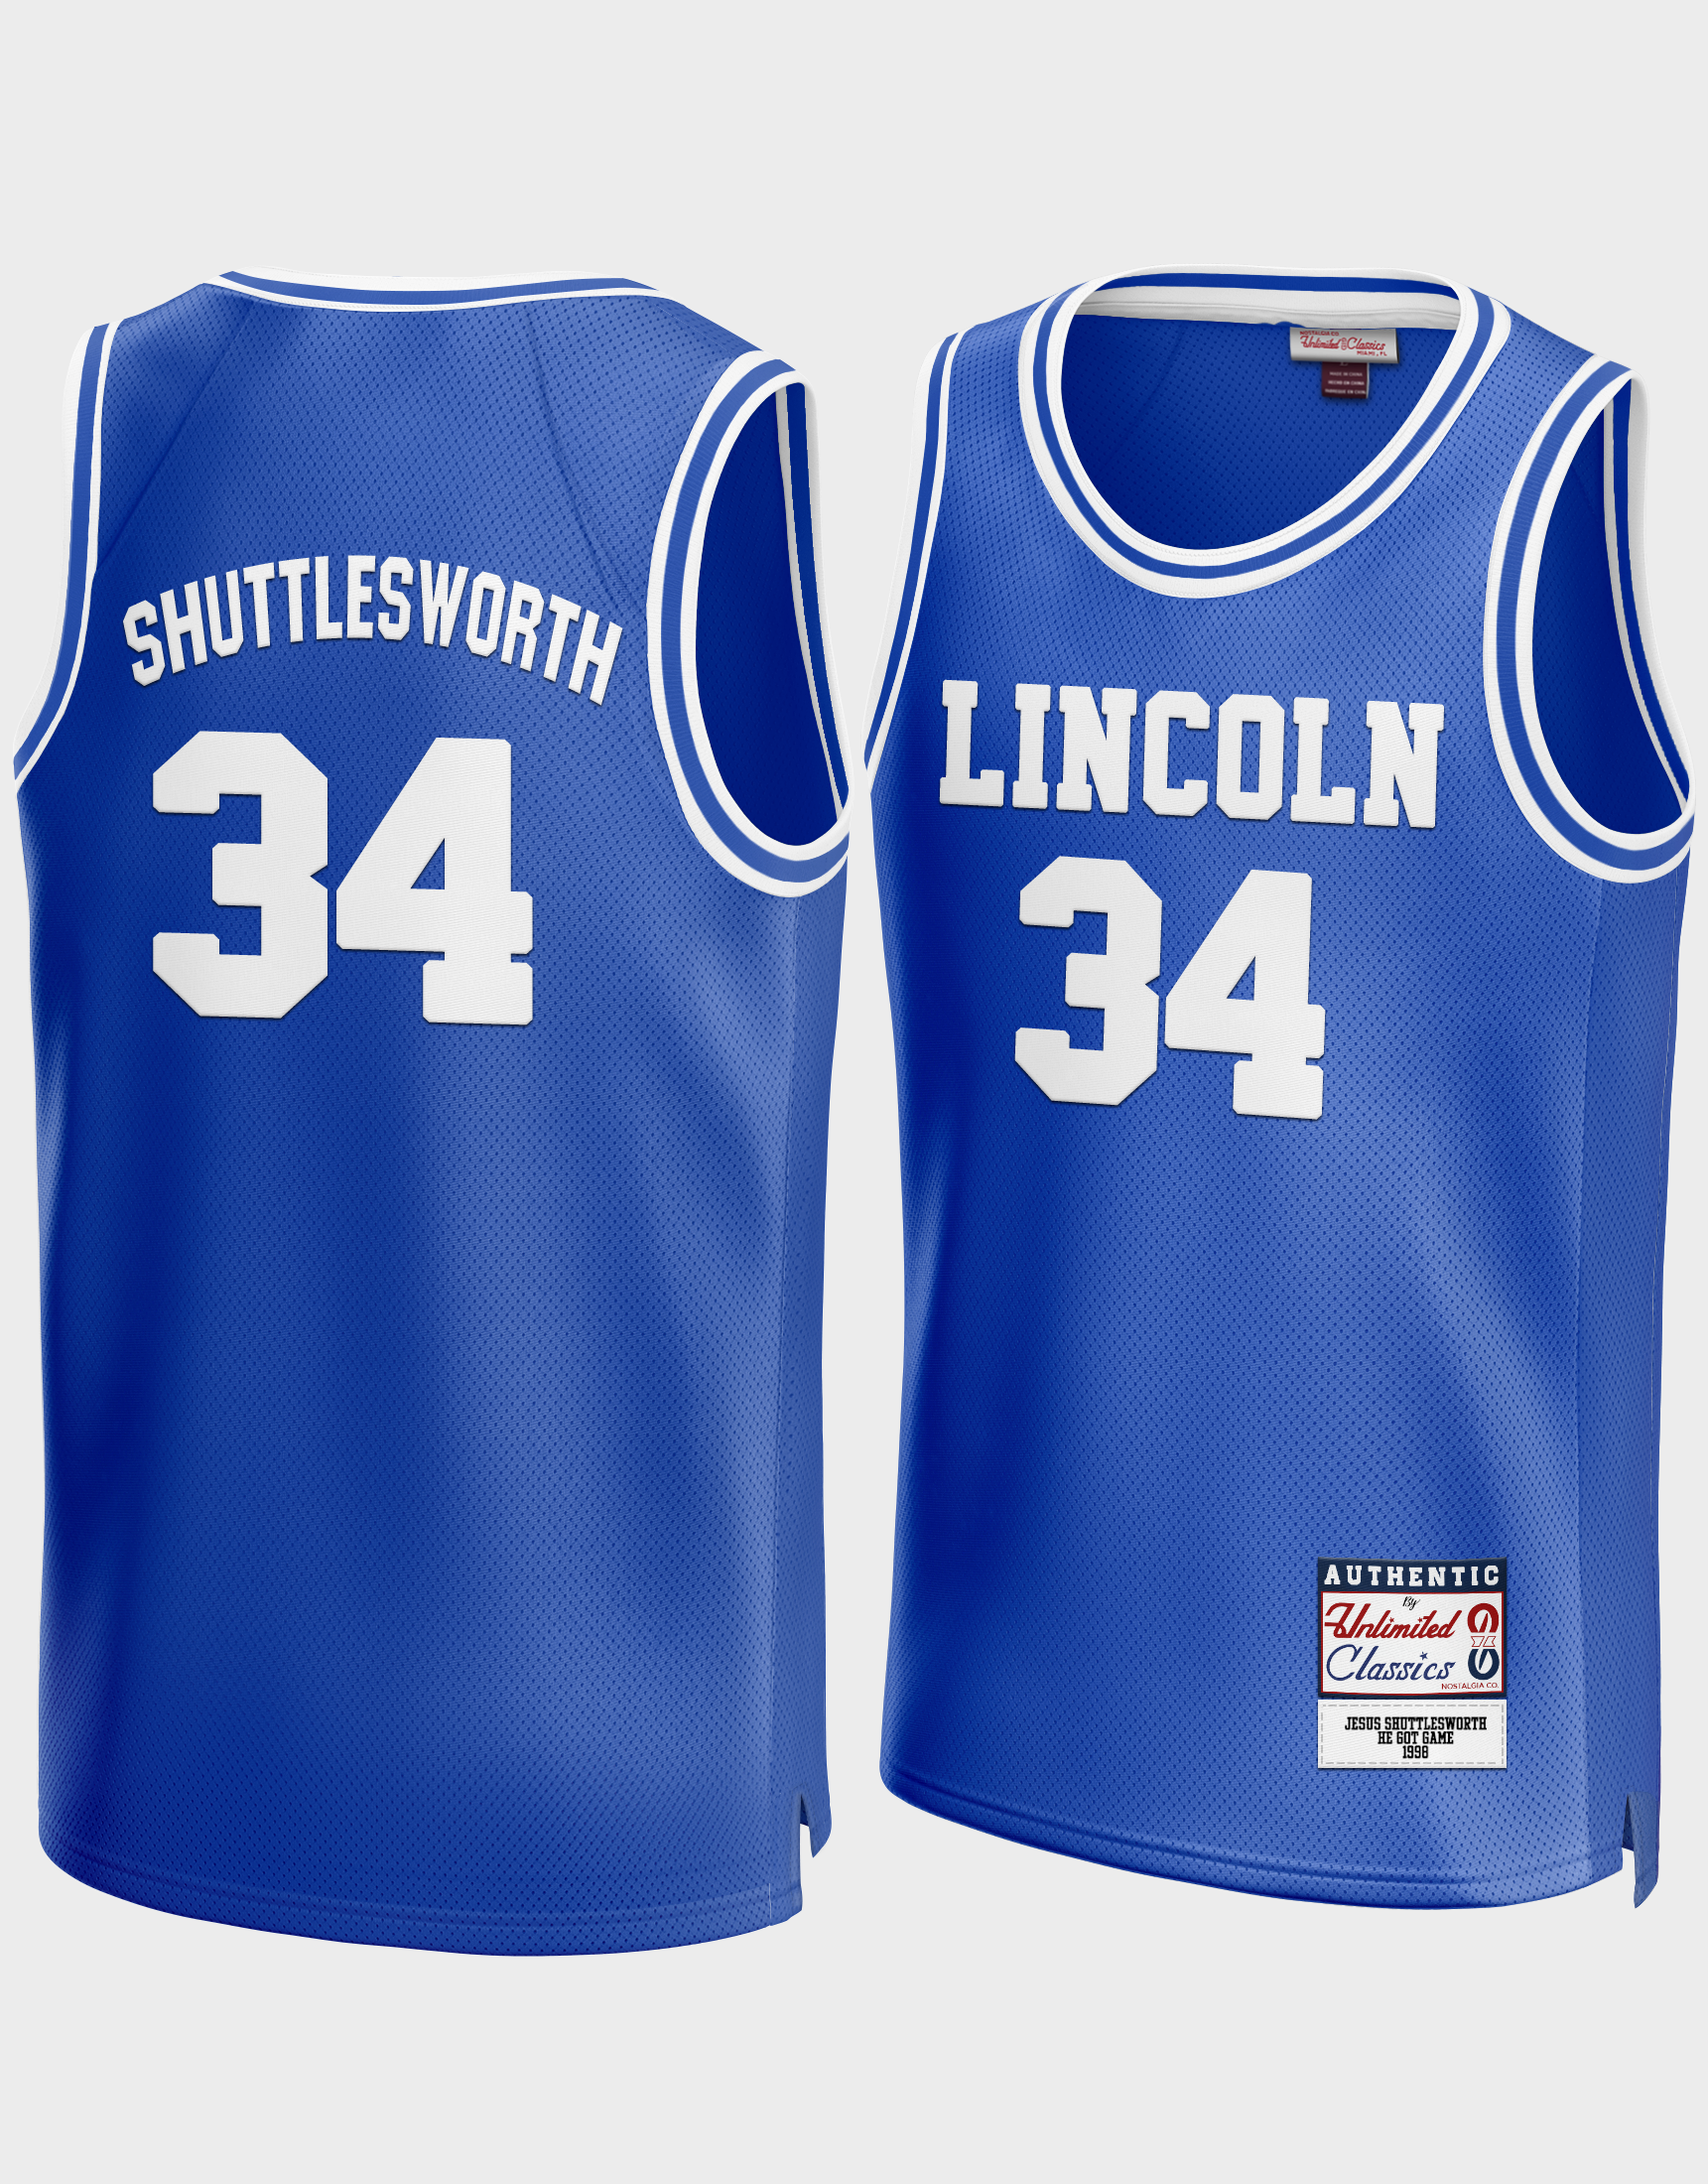 Jesus Shuttlesworth #34 Lincoln He Got Game Basketball Jersey Ray